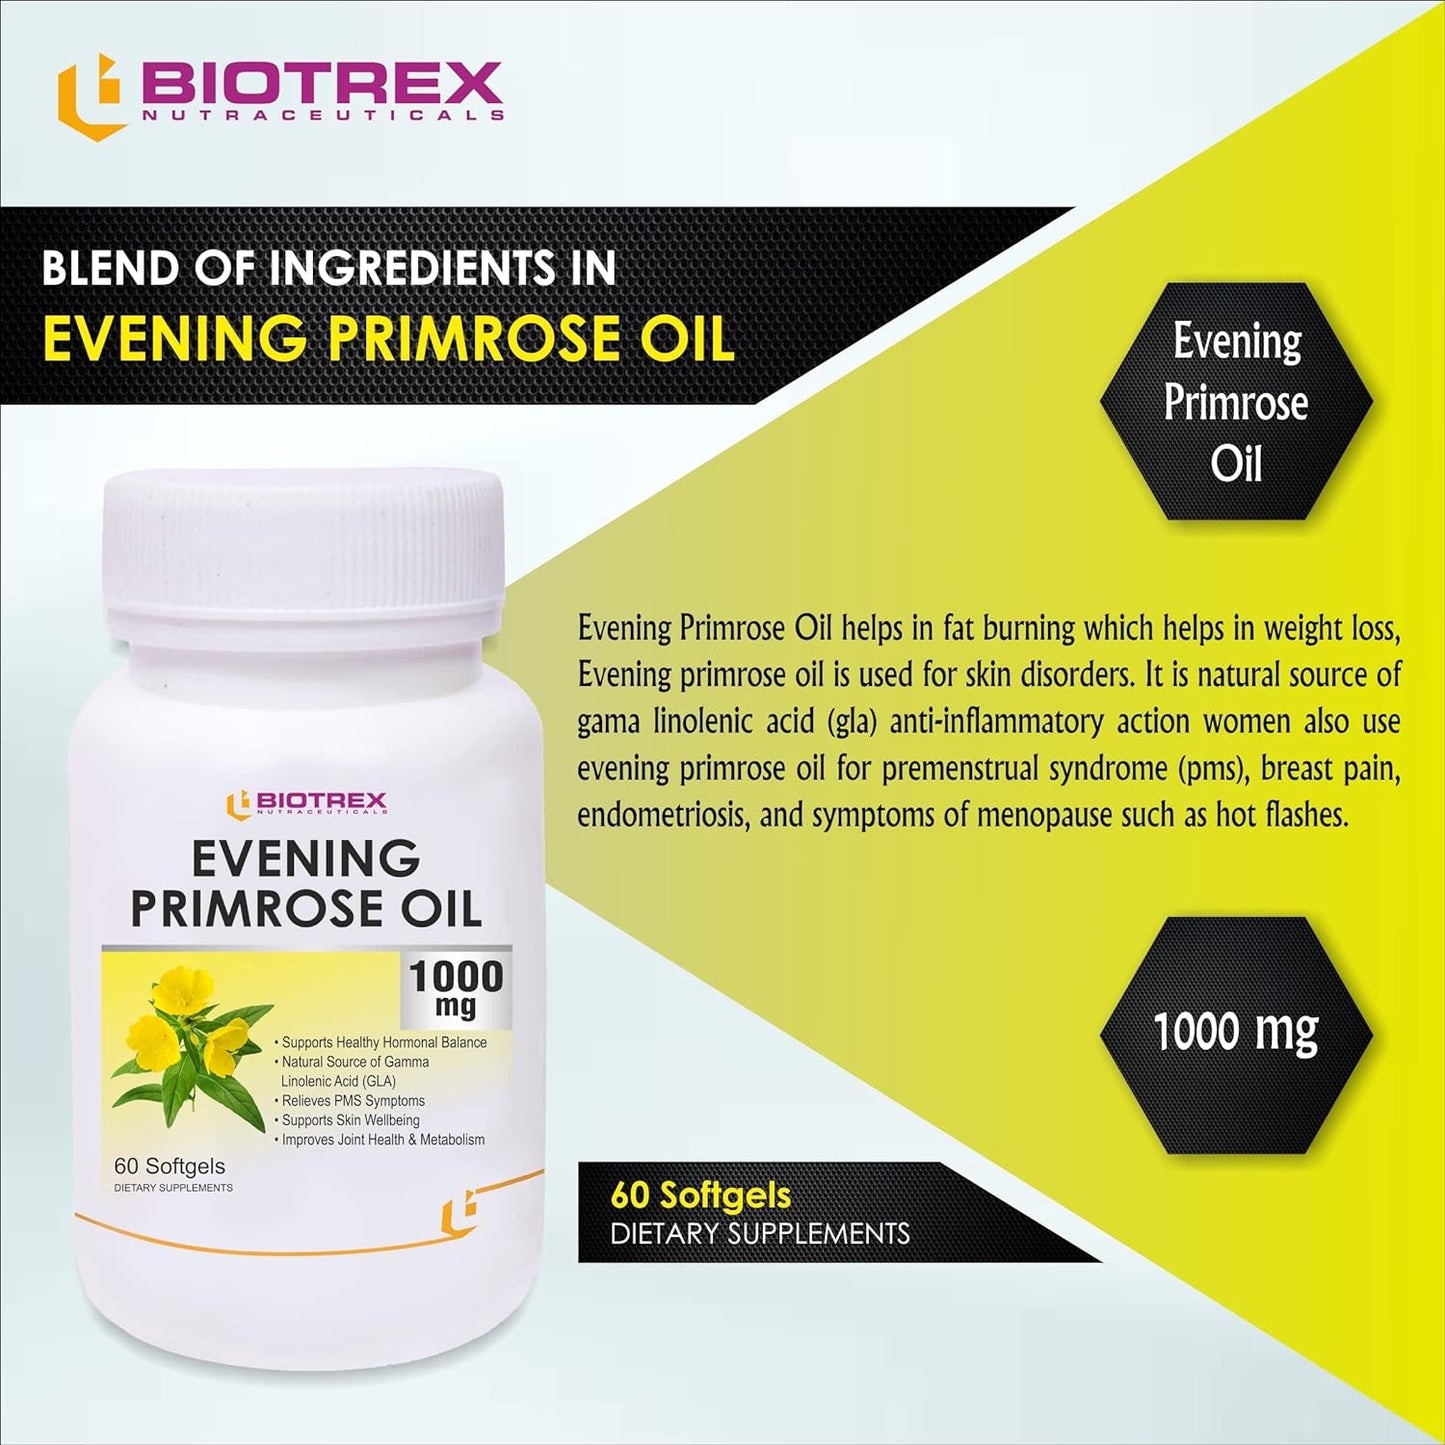 Biotrex Nutraceuticals Evening Primrose Oil 1000mg - 60 Softgels